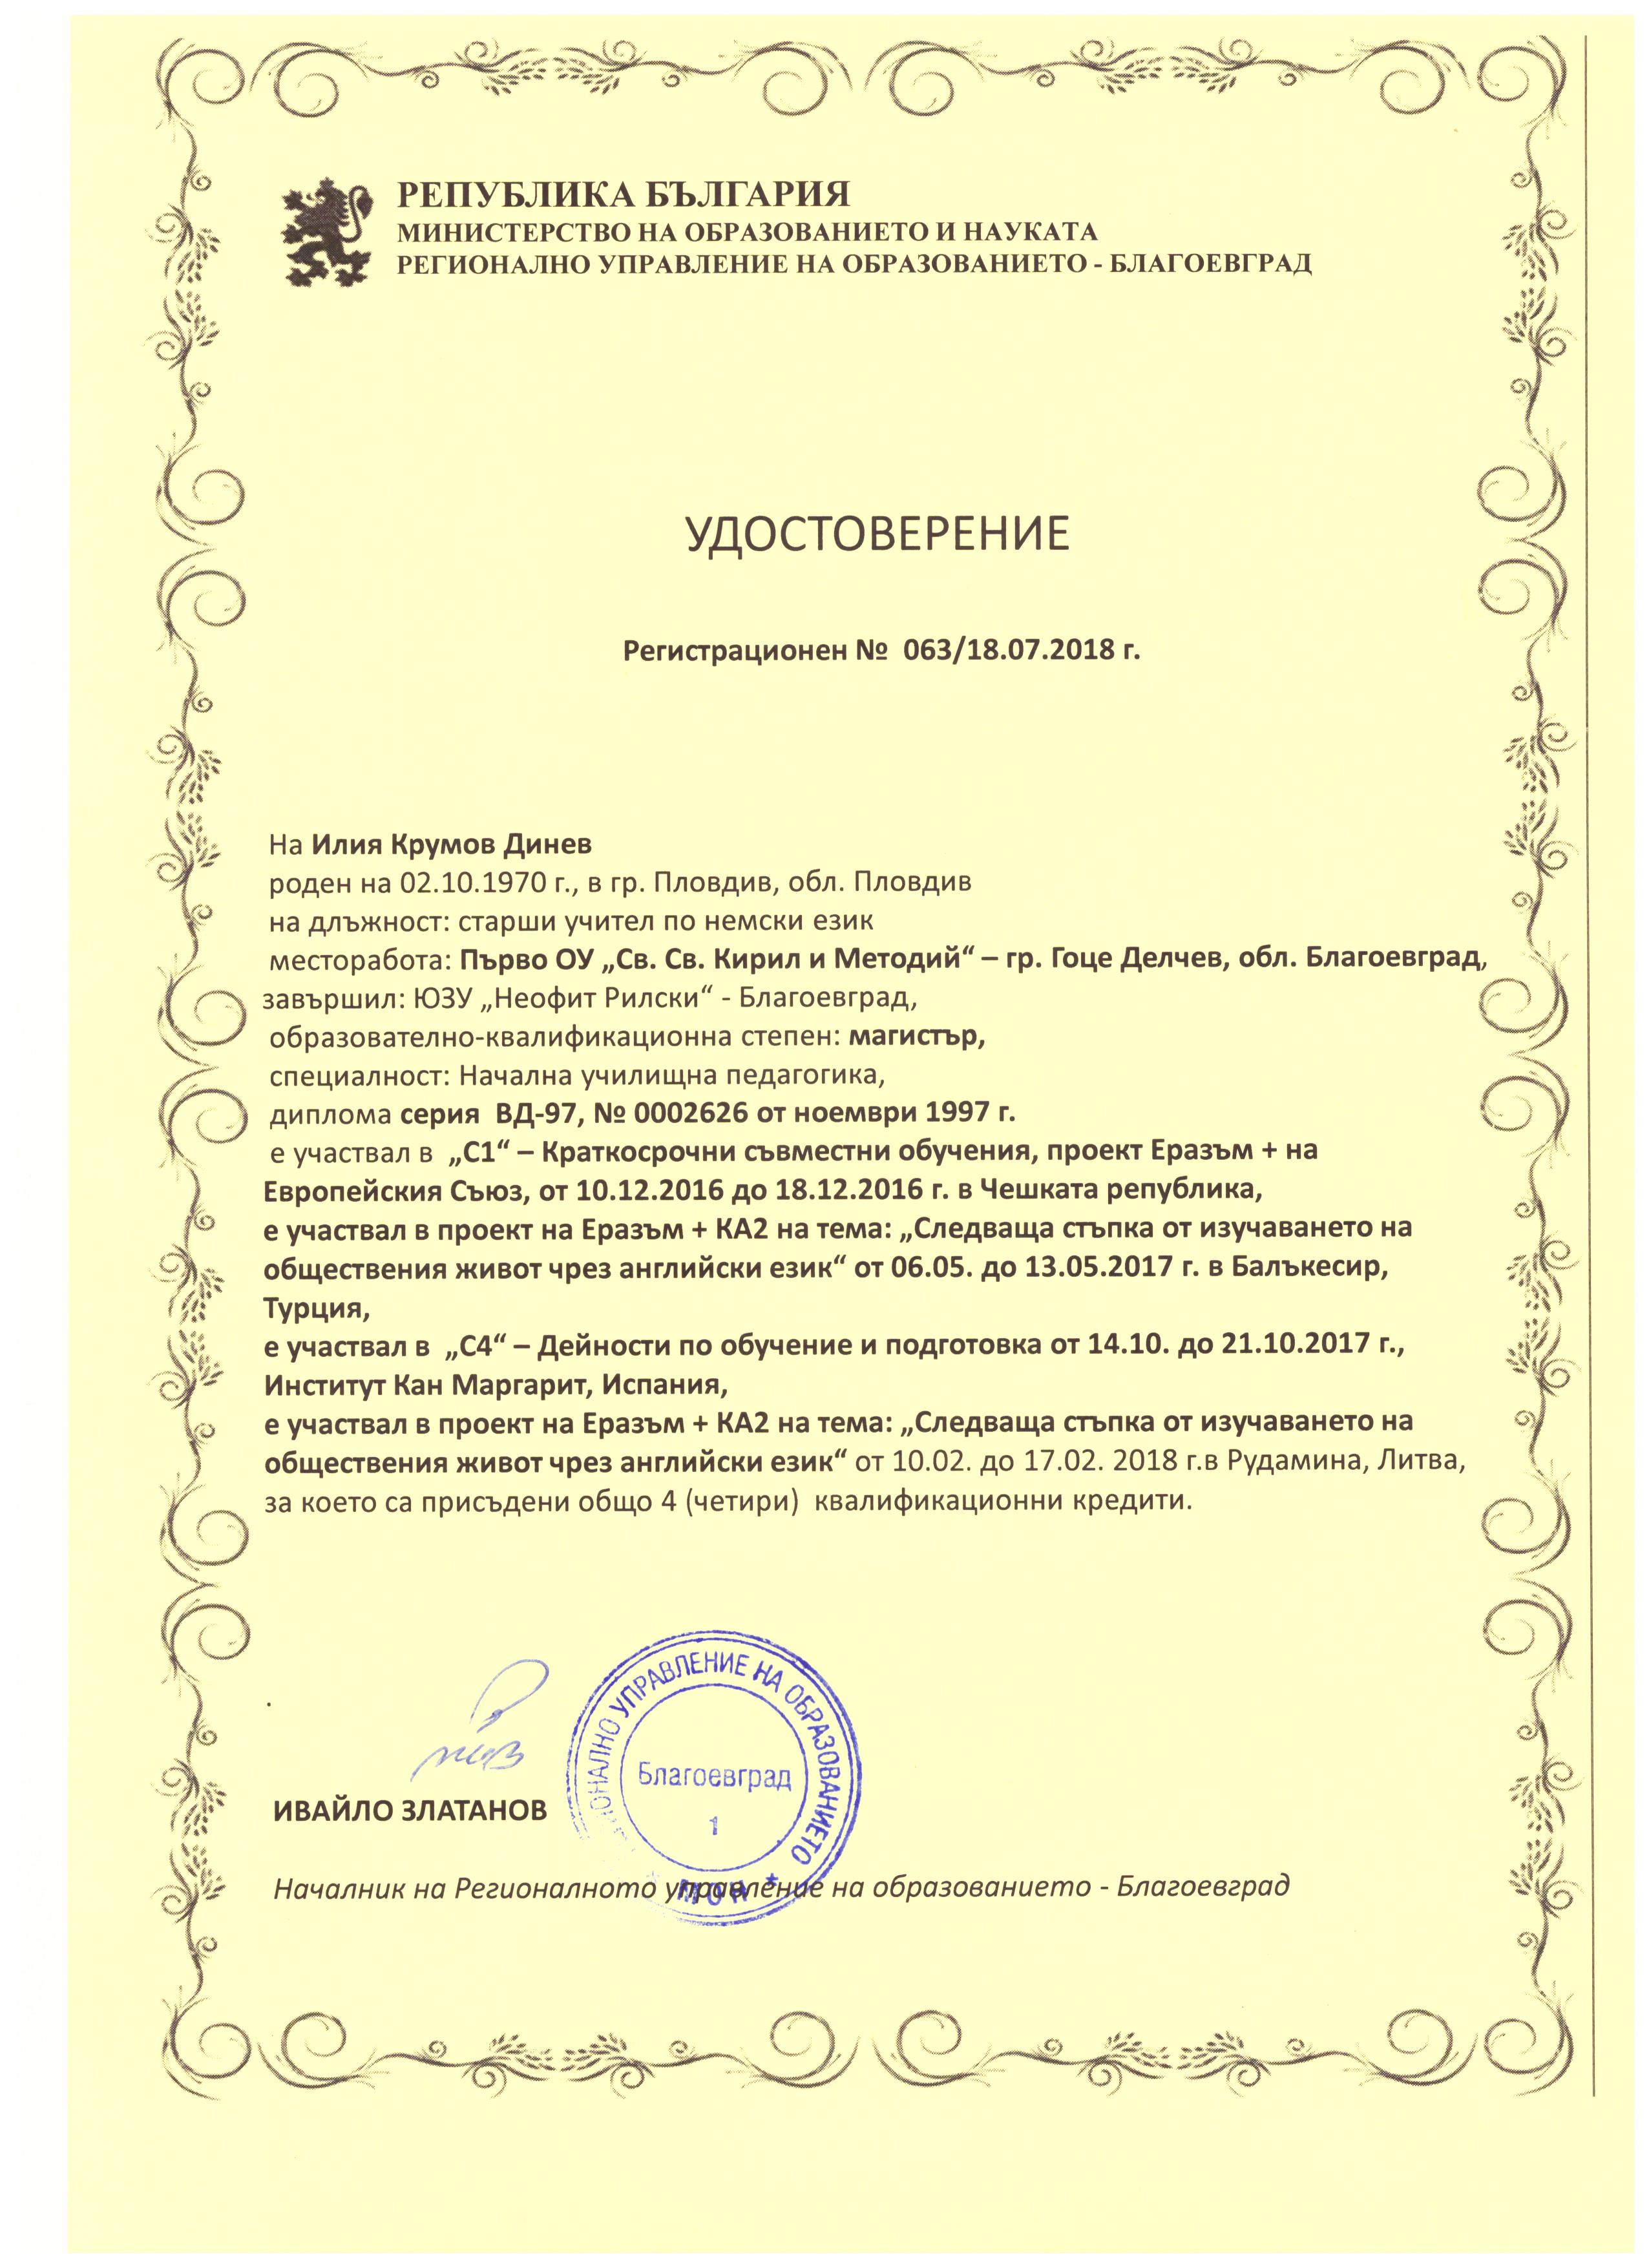 Ilia Dinev - 4 qualification credits from Regional Educational Directorate - Blagoevgrad